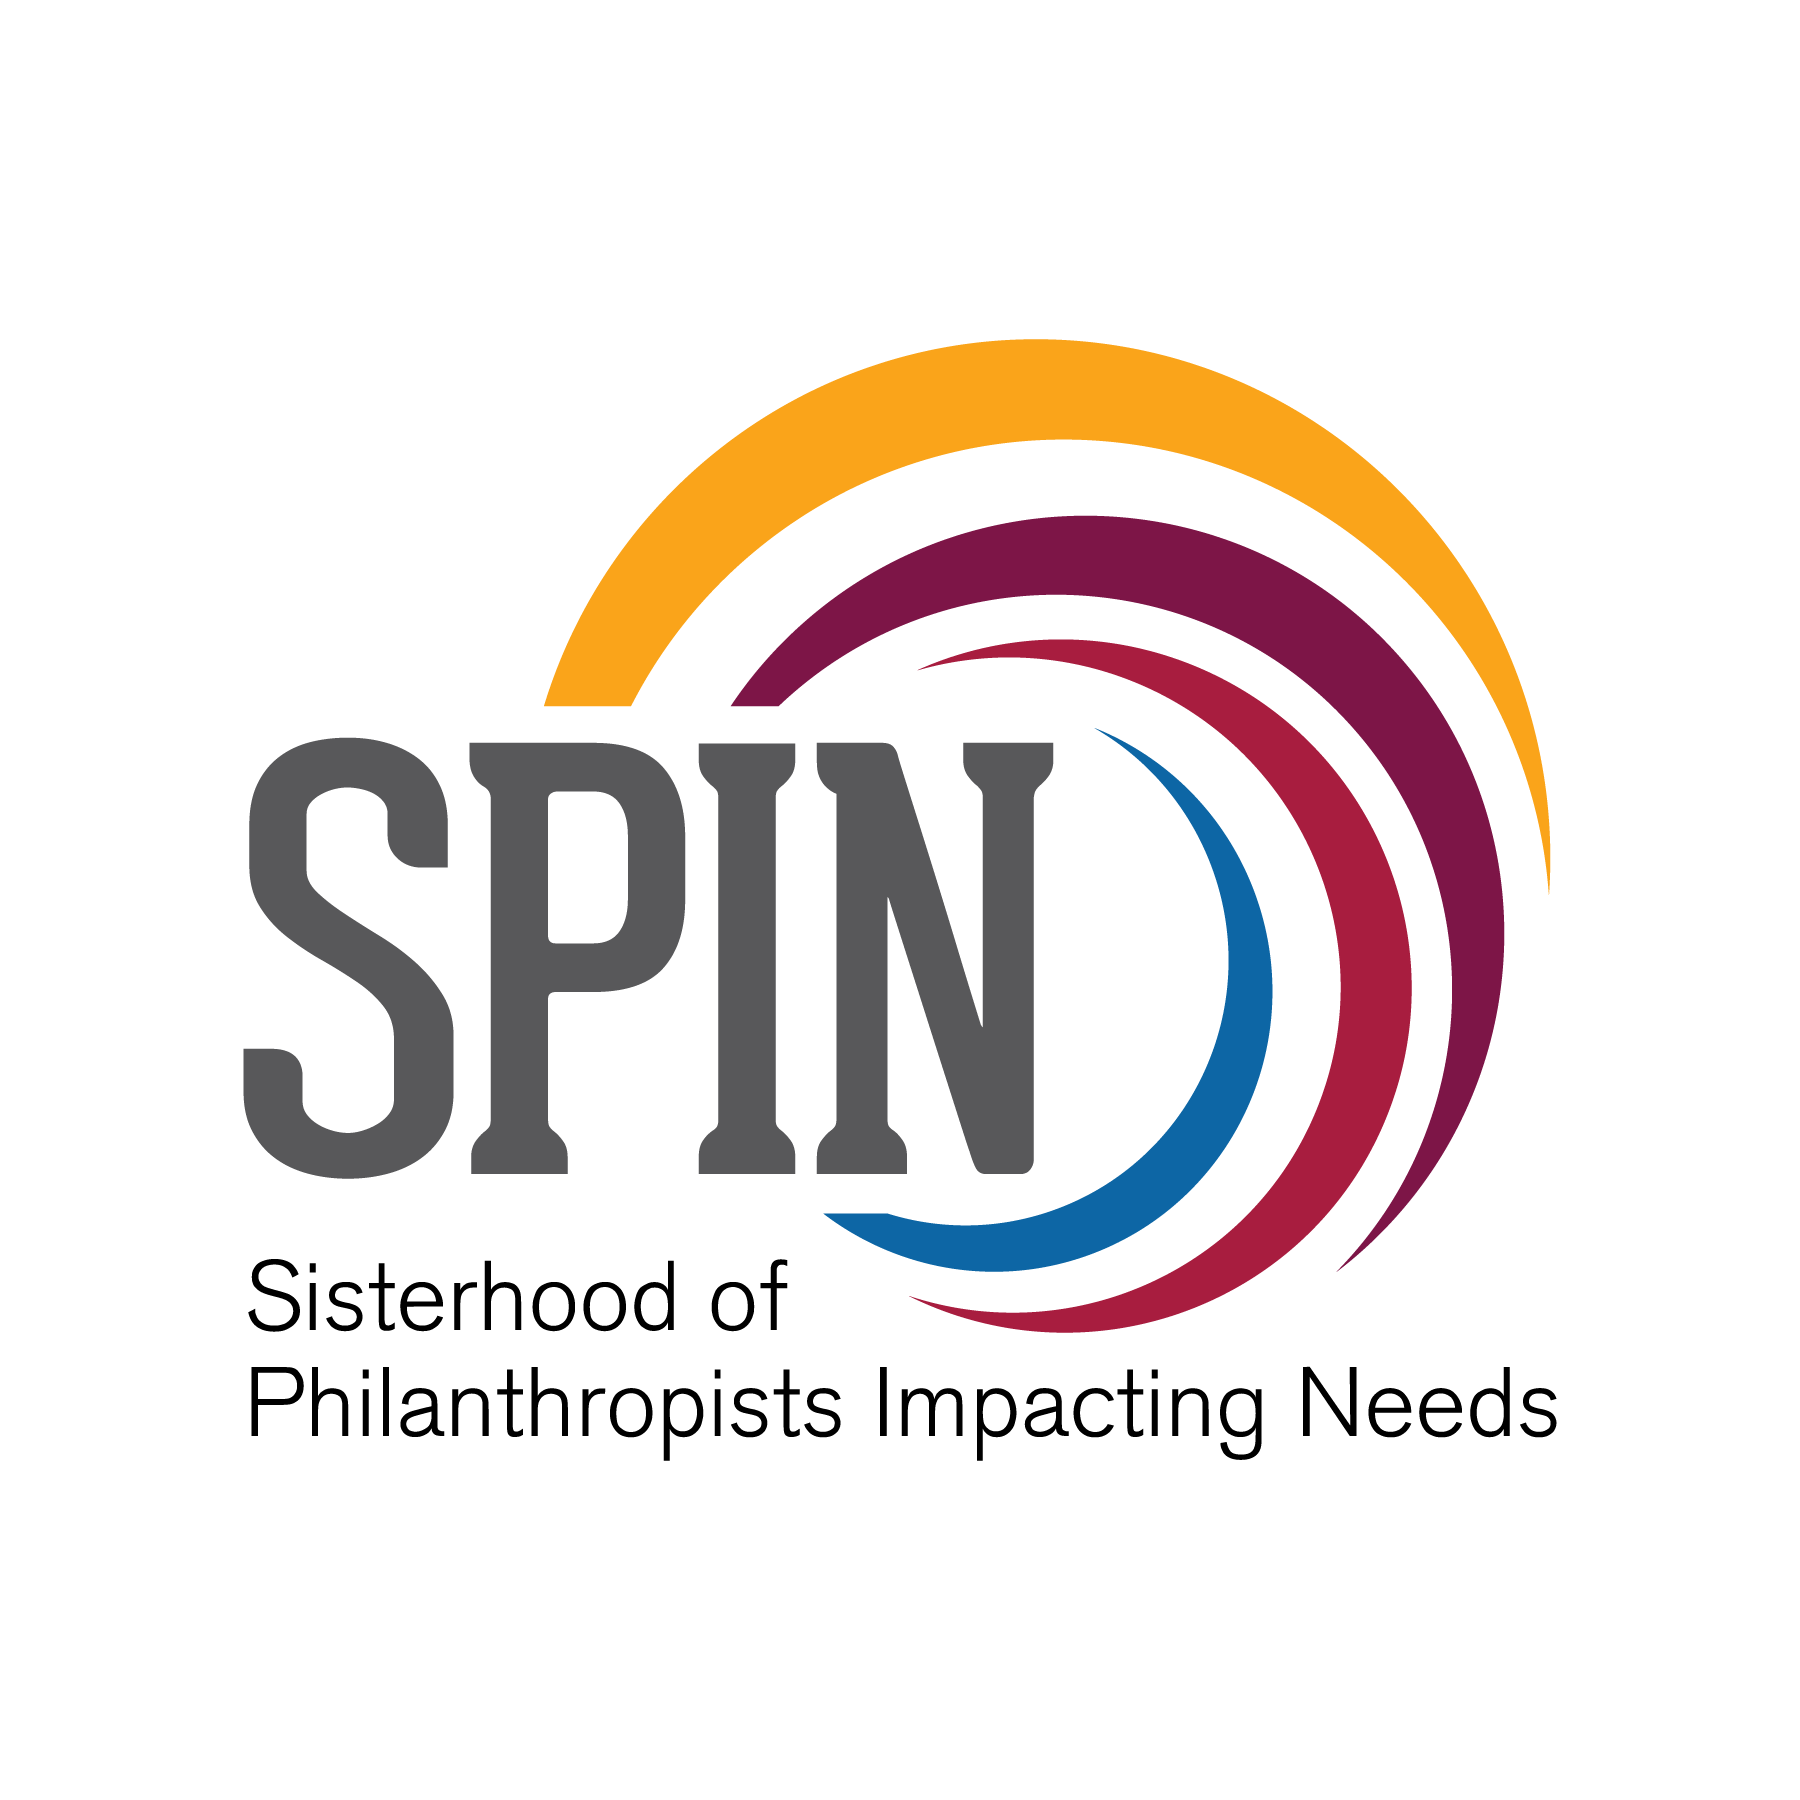 SPIN (Sisterhood of Philanthropists Impacting Needs) logo